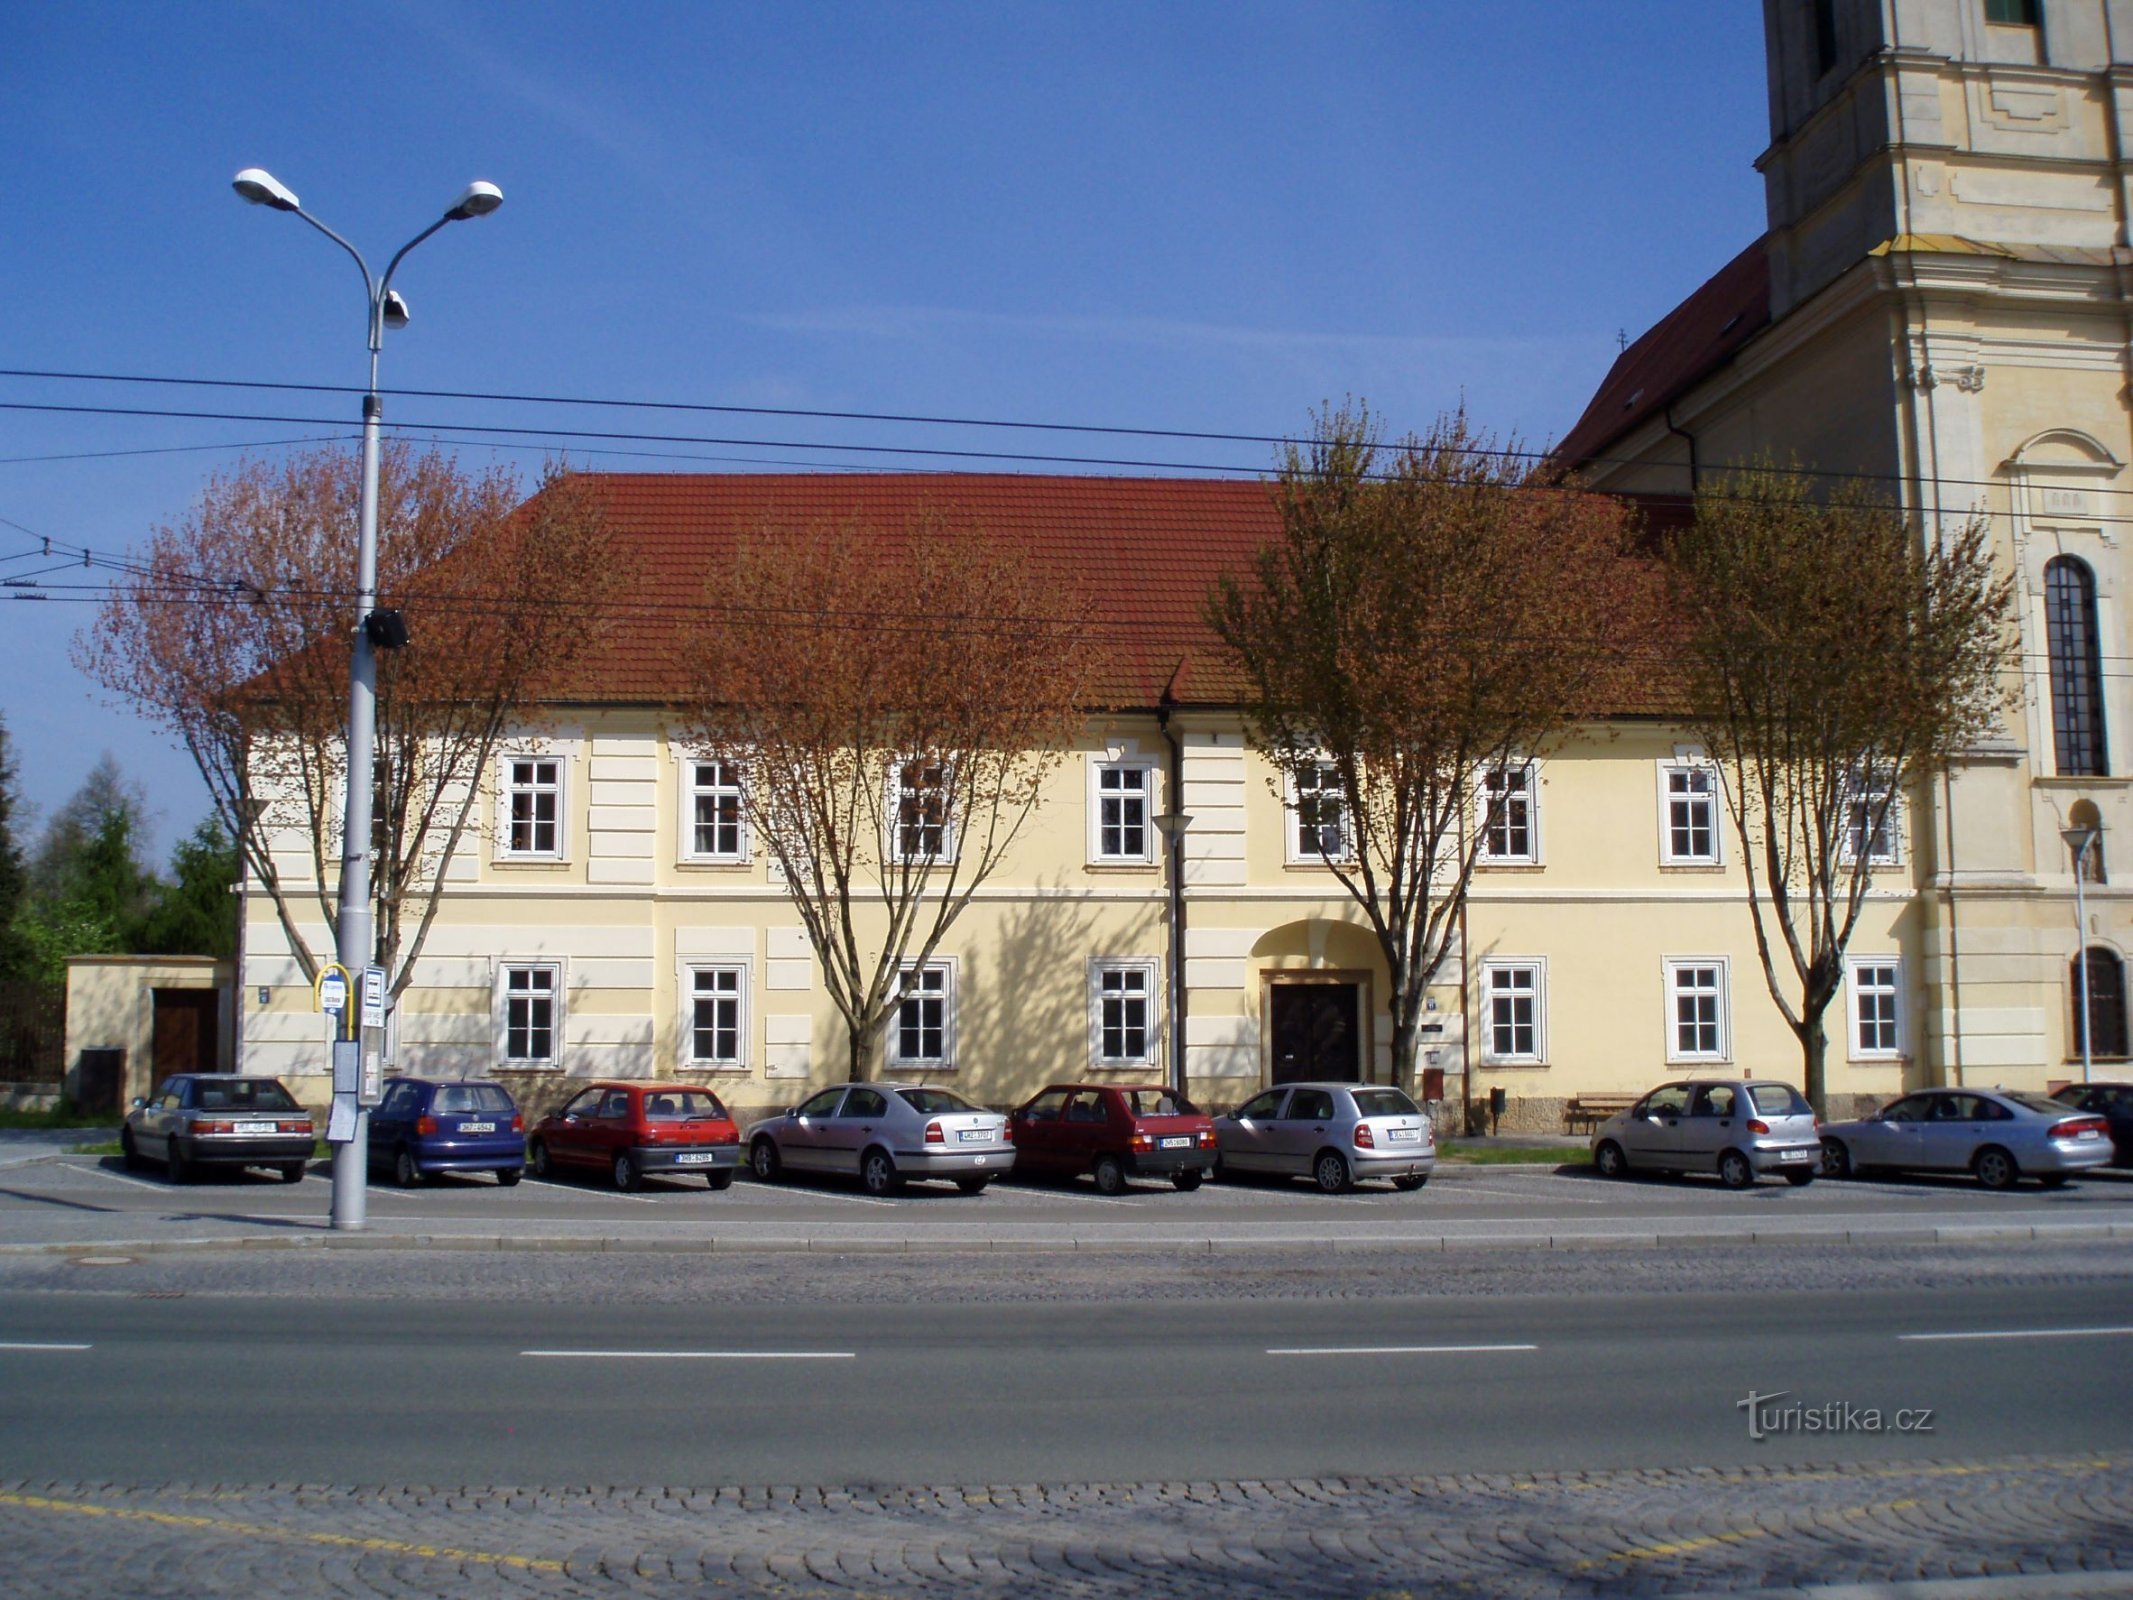 Het voormalige klooster (Denisovo náměstí nr. 26 en 172, Hradec Králové, 28.4.2010/XNUMX/XNUMX)